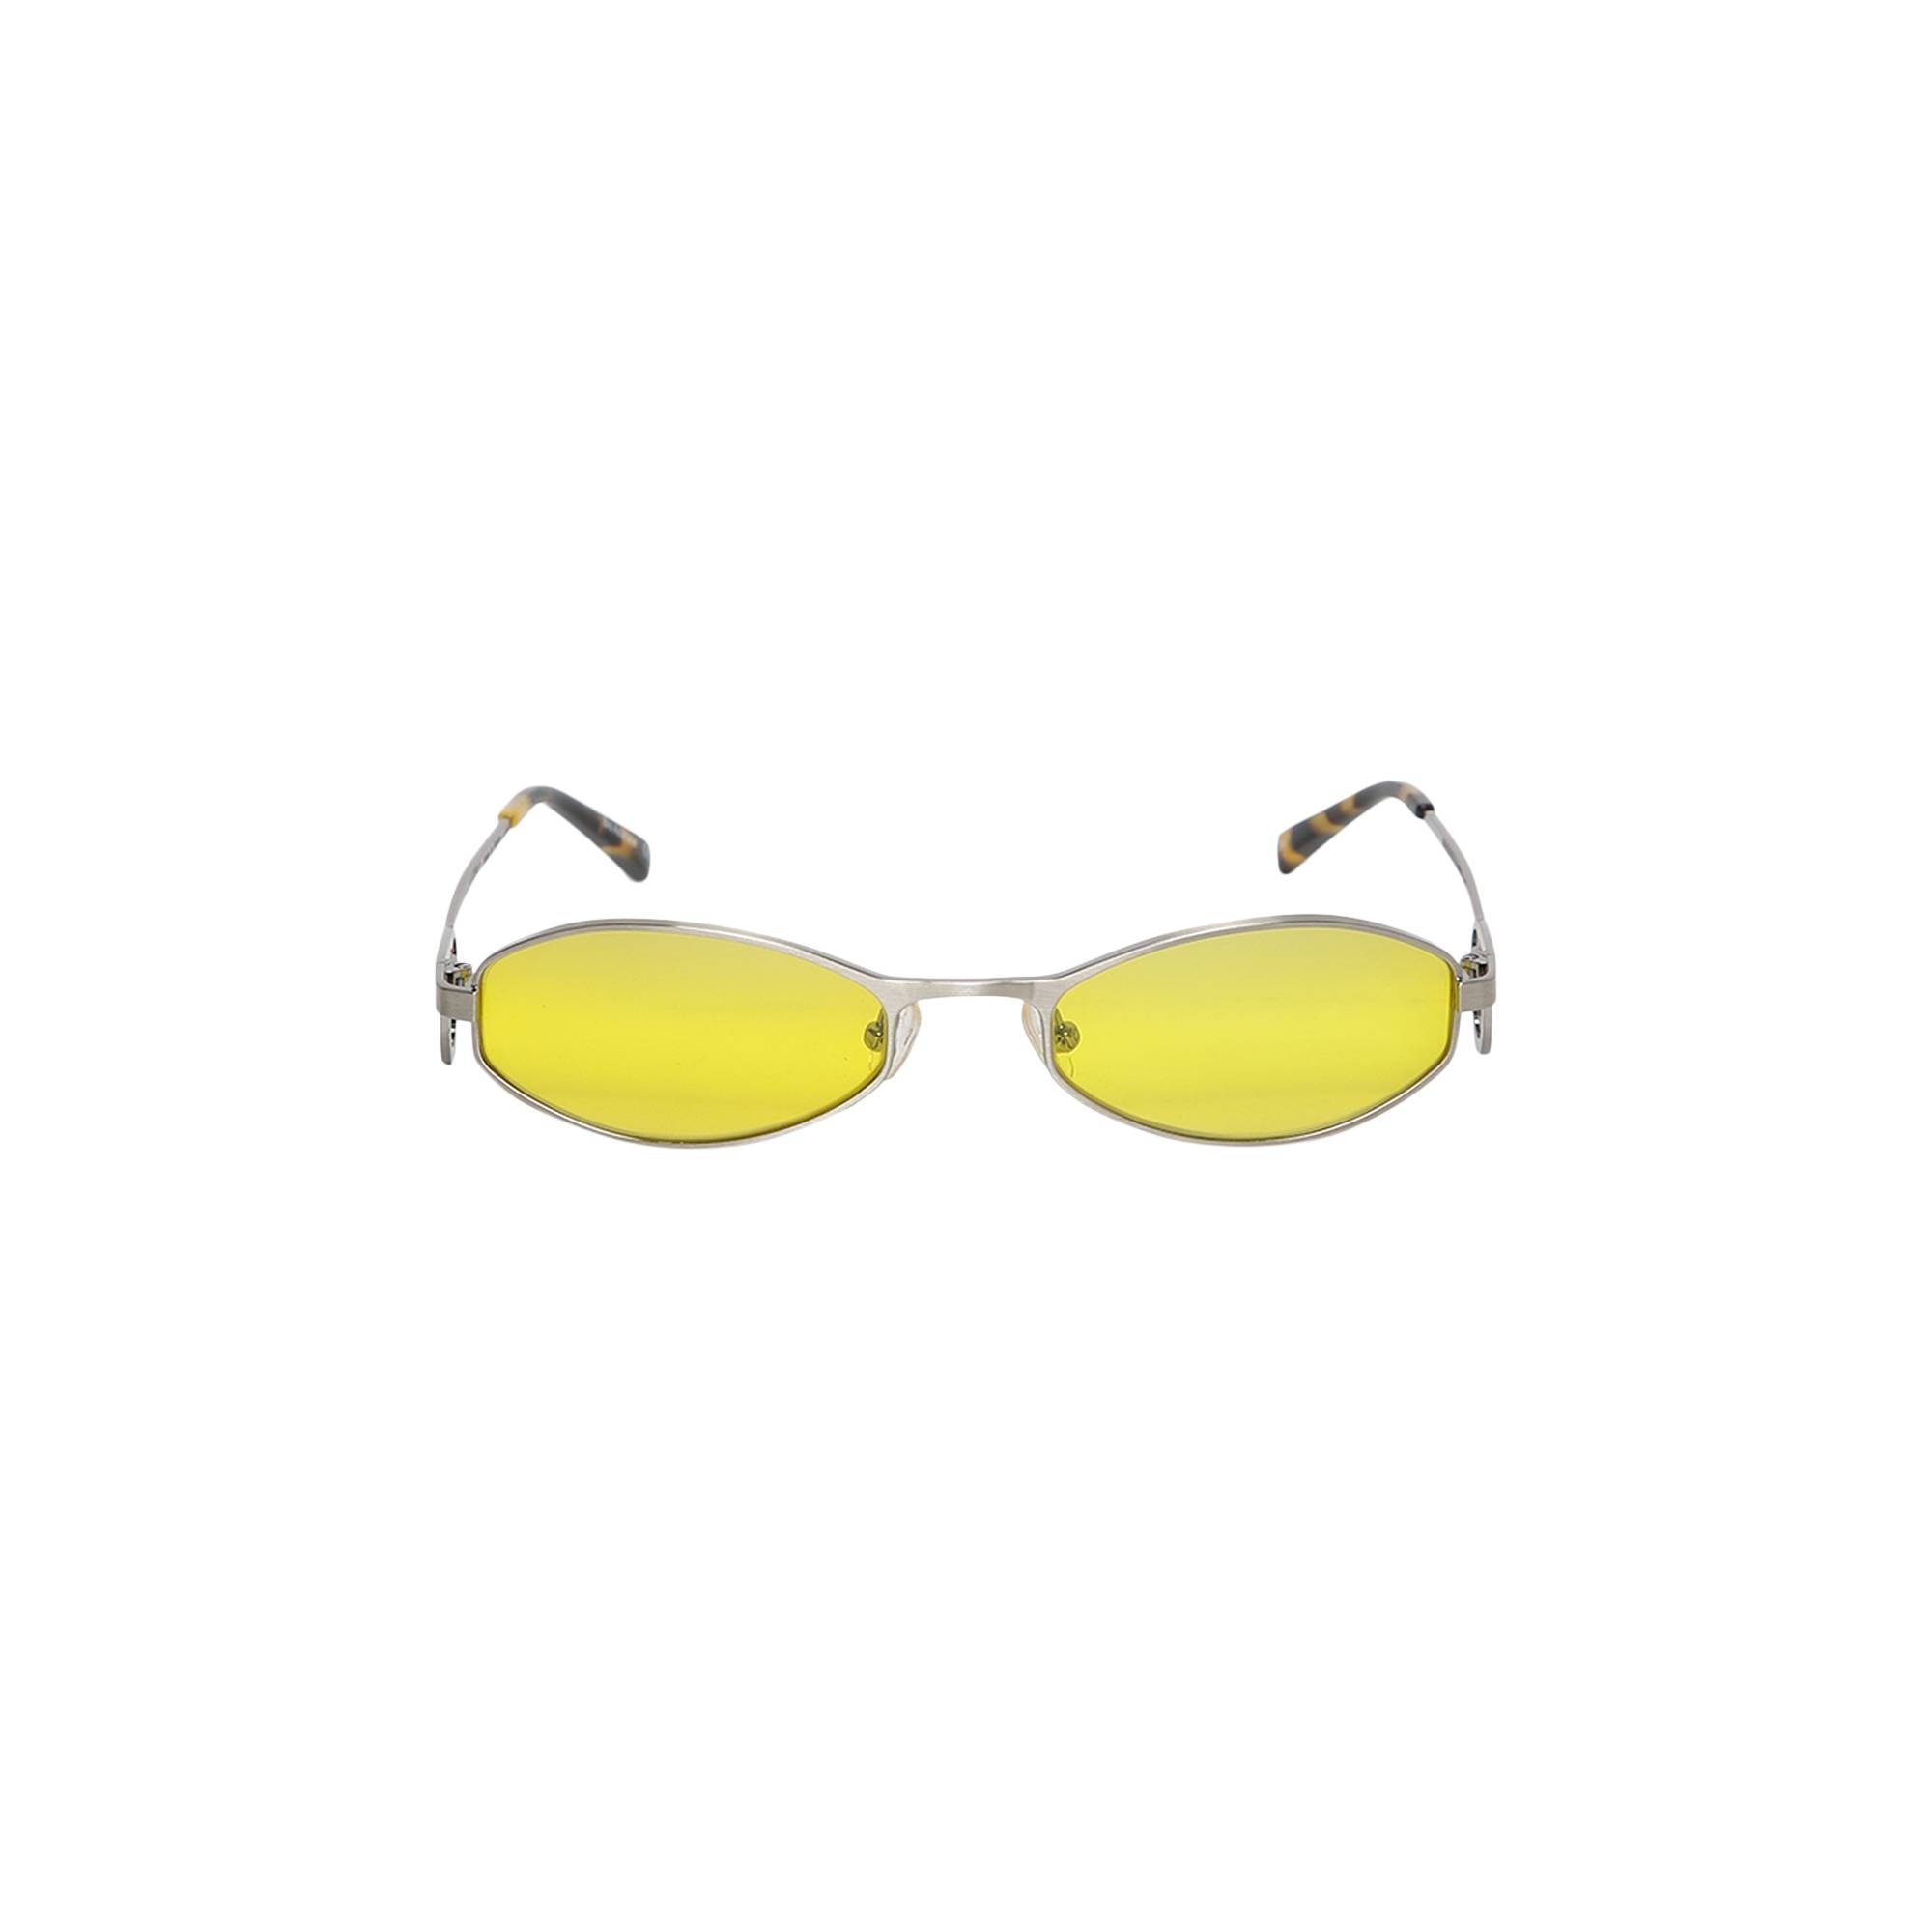 Marine Serre x Vuarnet Swirl Frame Oval Sunglasses 'Yellow' - 1